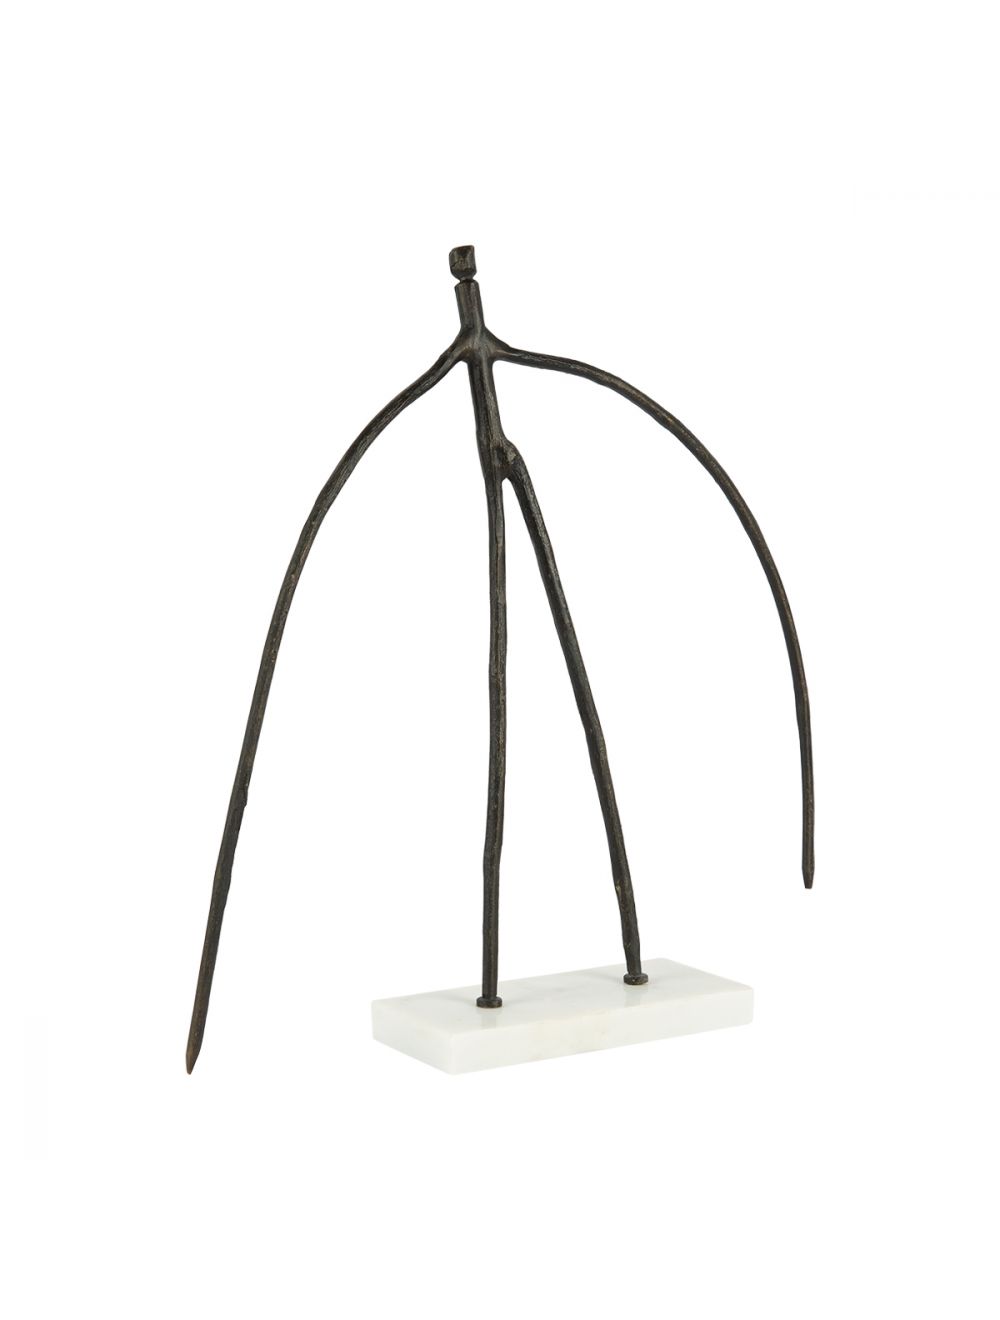 Stick Men Sculpture II